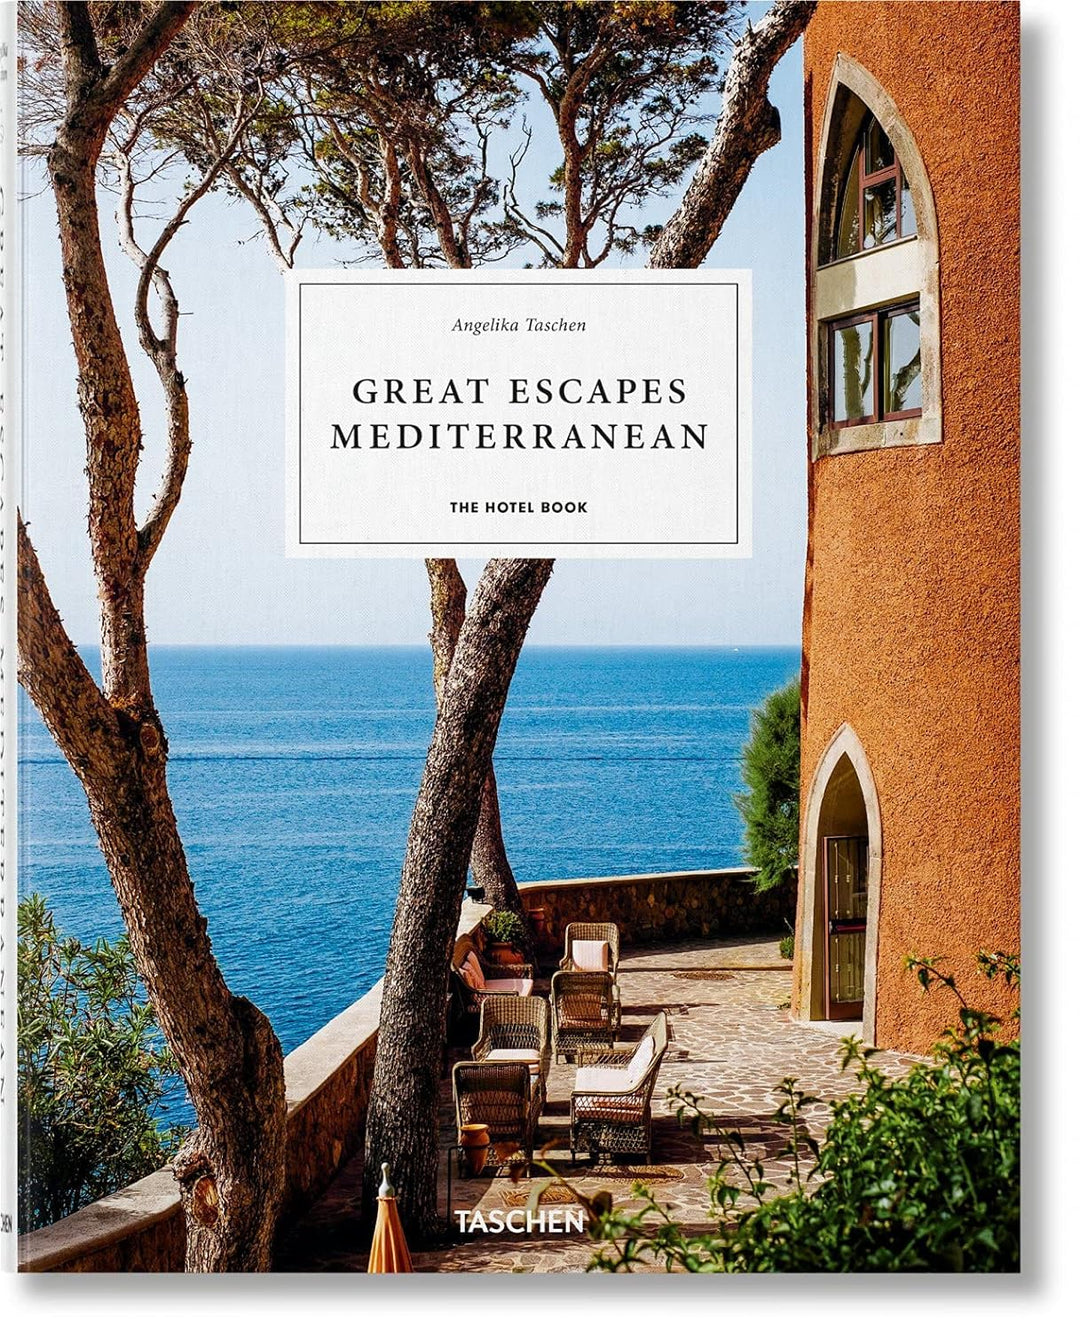 Great Escapes: Mediterranean - The Hotel Book